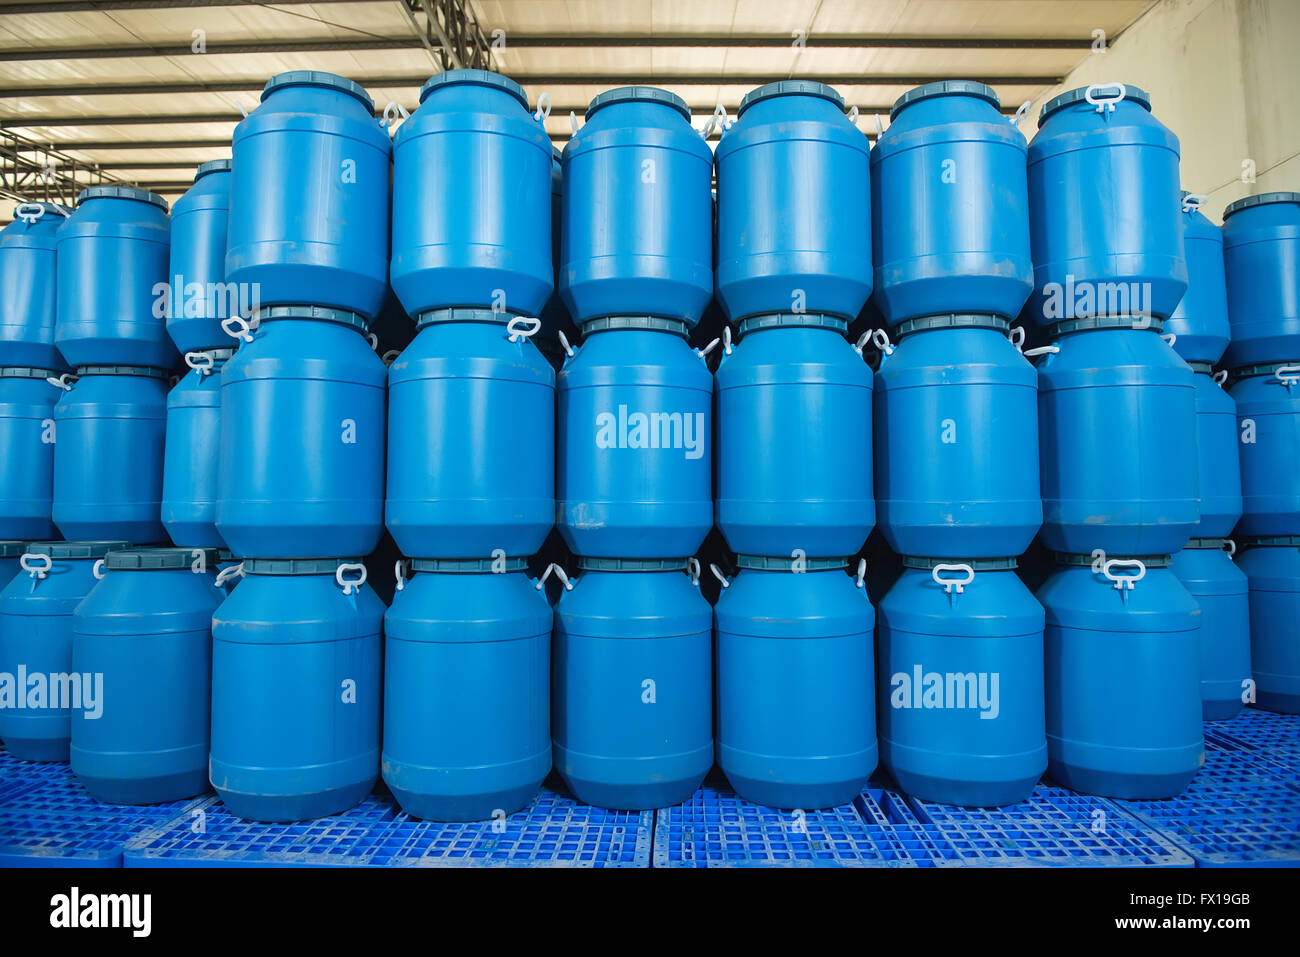 Blue Plastic barrels contain Stock Photo